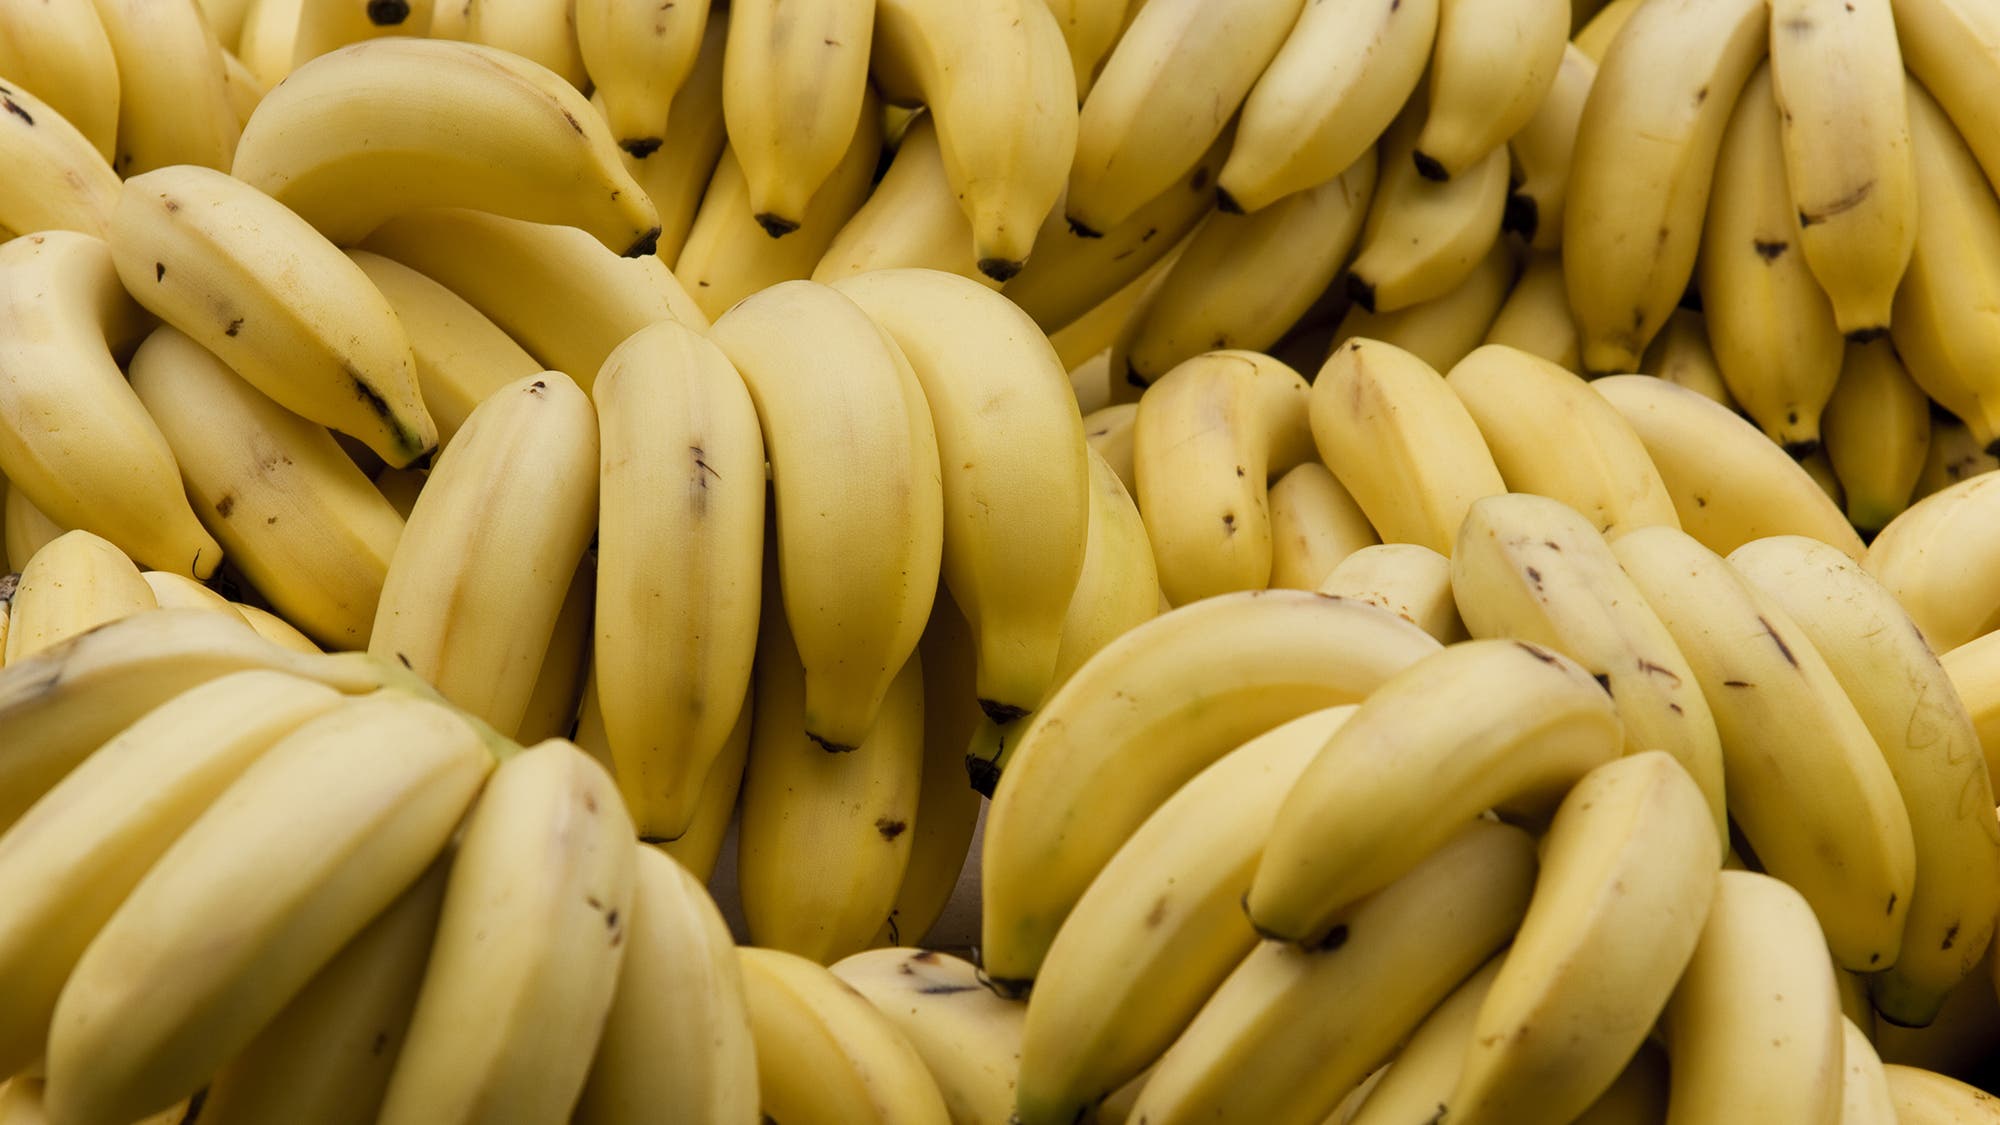 Bananas famosas - 🧡 Bananas famosas 2 (@bananasfamosa2) Twitter Tweets * T...